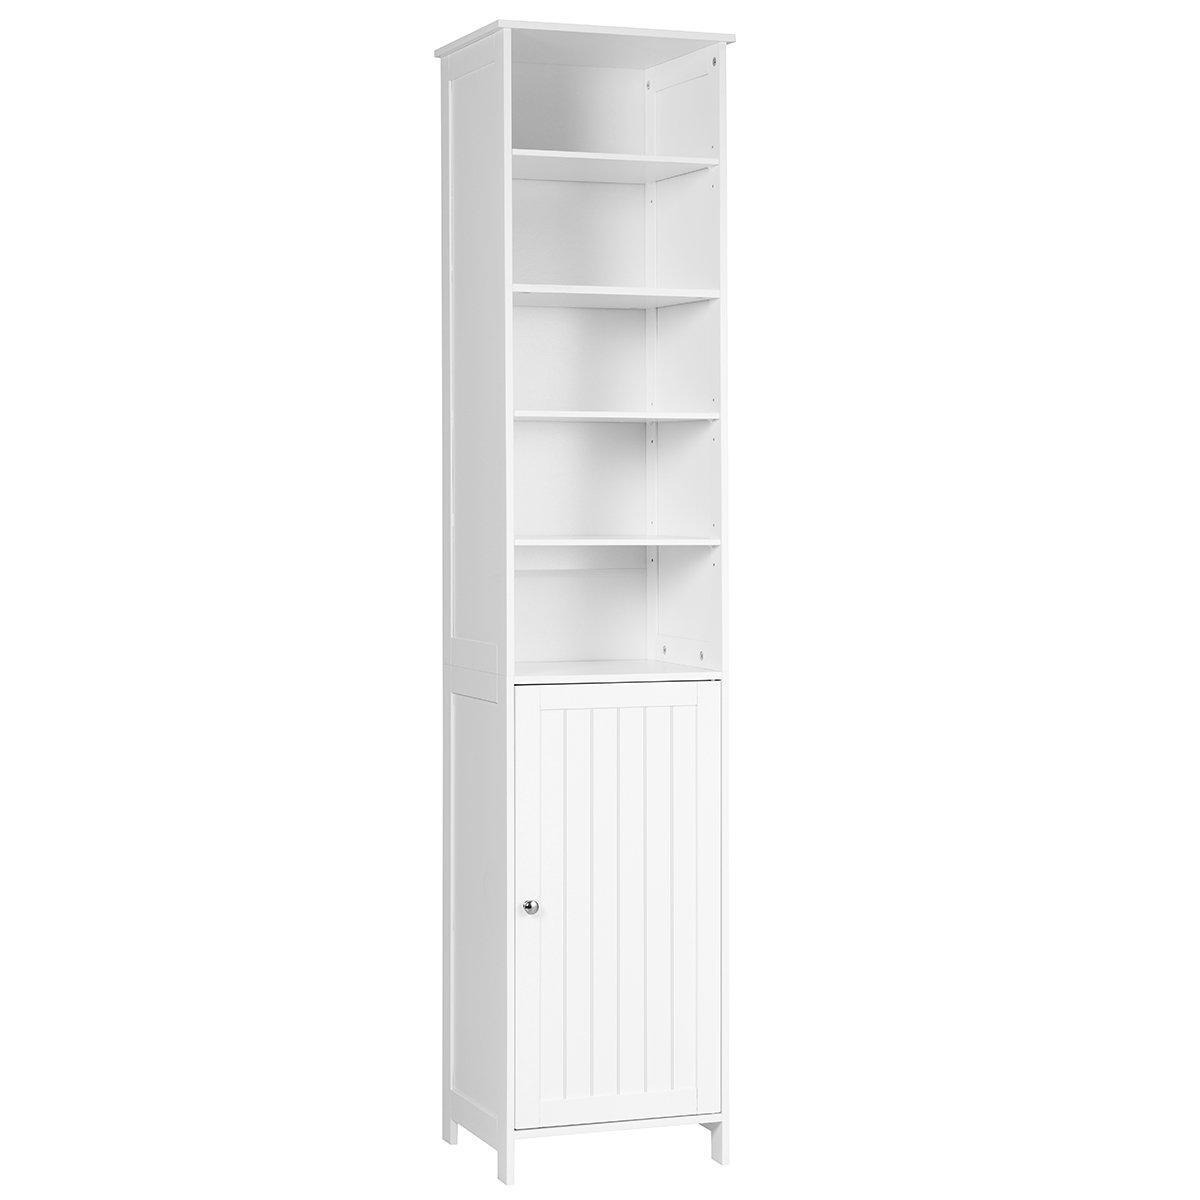 Bathroom Tall Cabinet Slim Freestanding Storage Organizer W/ Adjustable Shelves - image 1